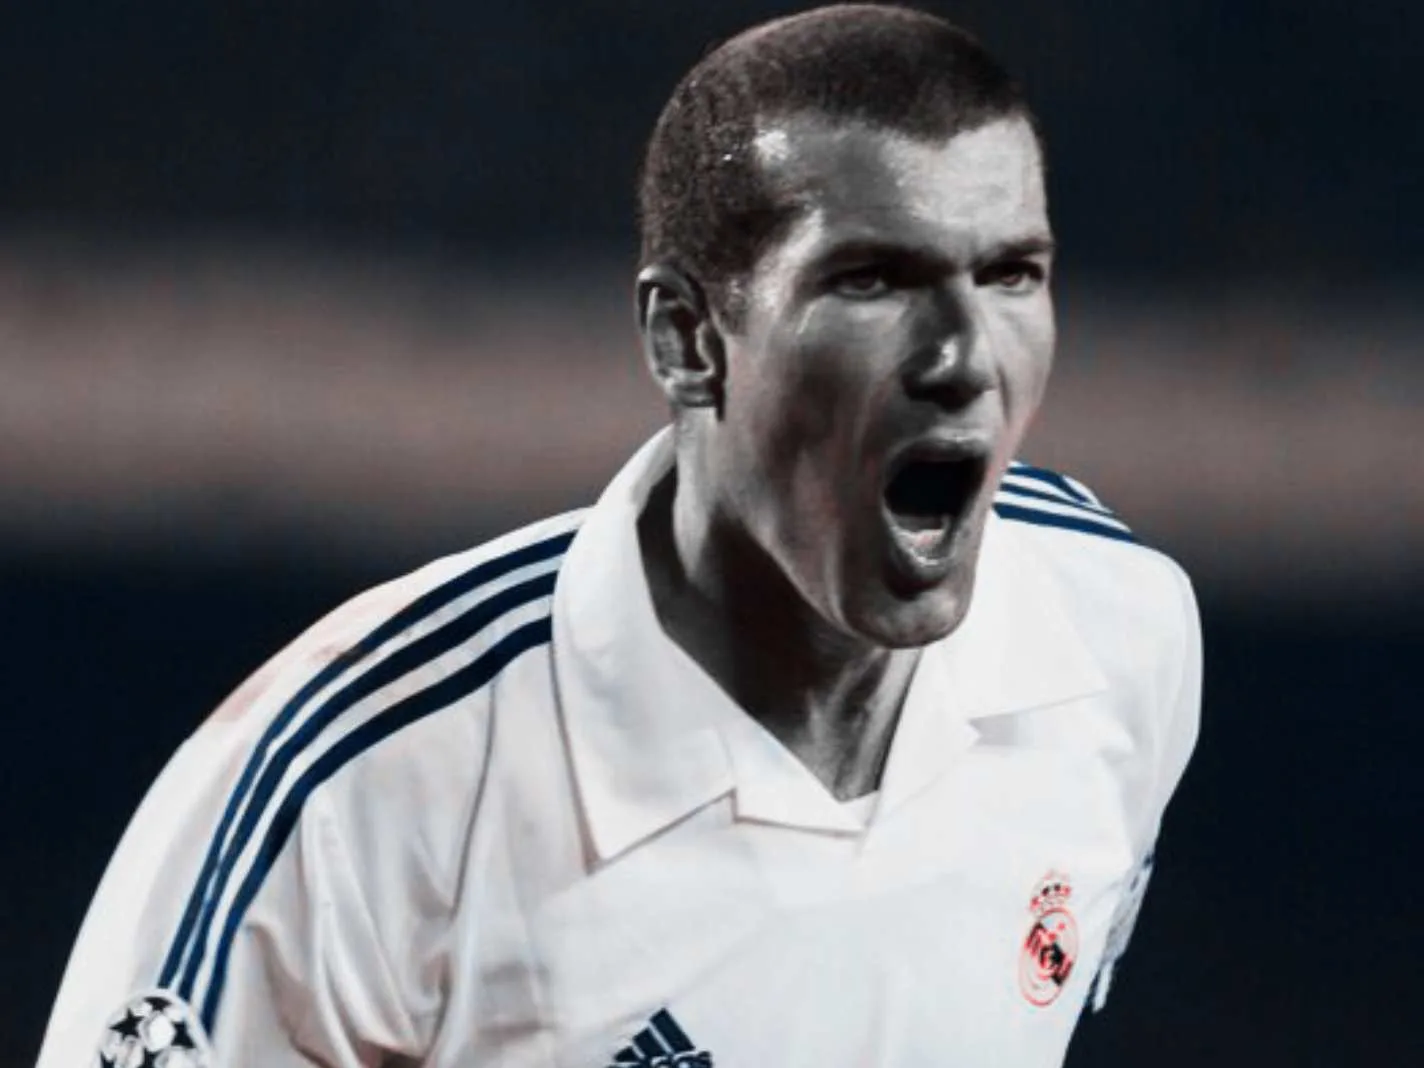 Zidane in Real Madrid kit